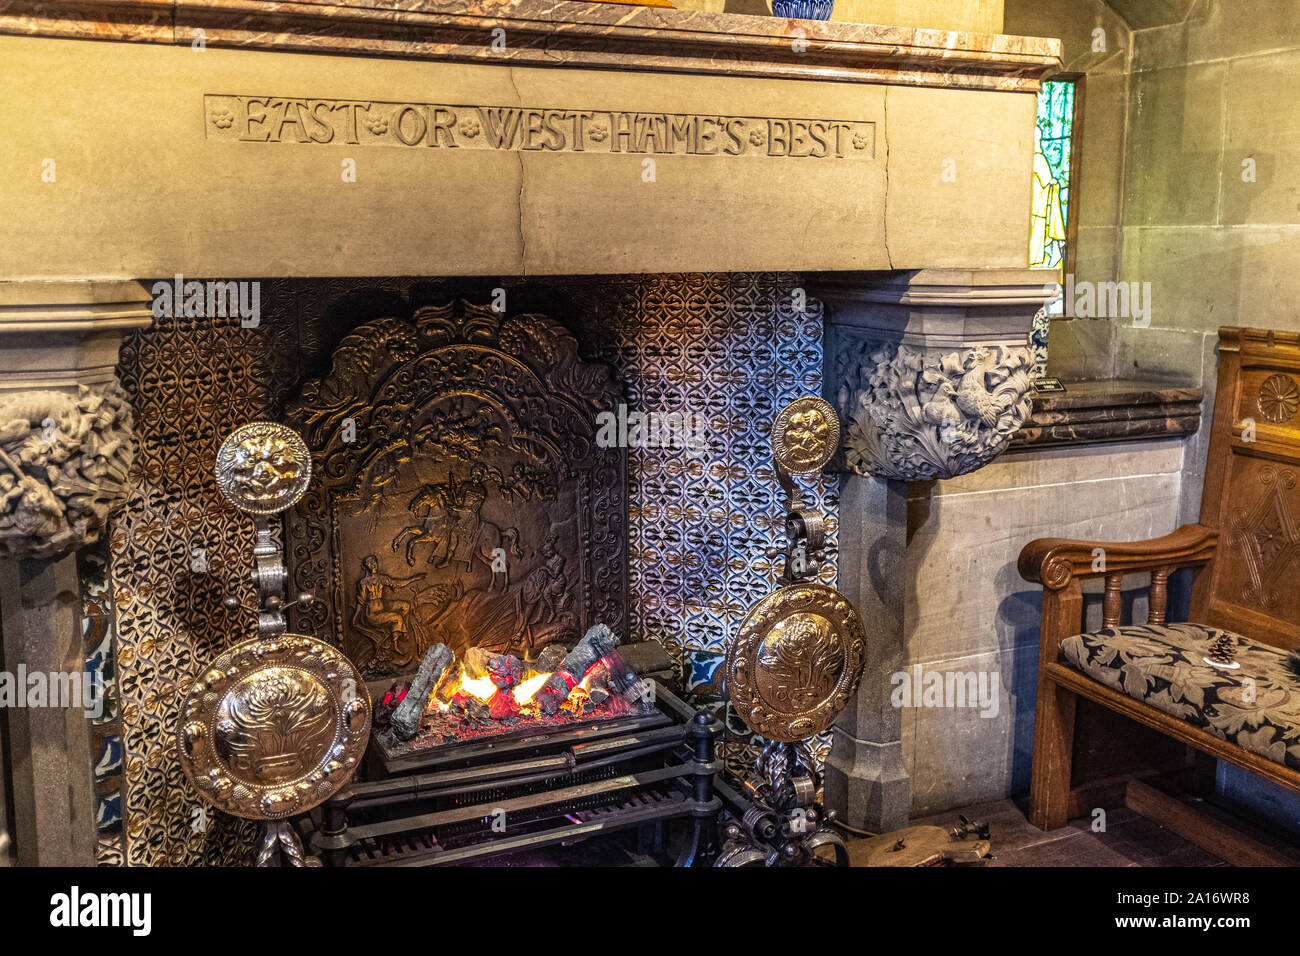 East or West Hames Best, carved stone fireplace, Cragside House, Northumberland, UK Stock Photo